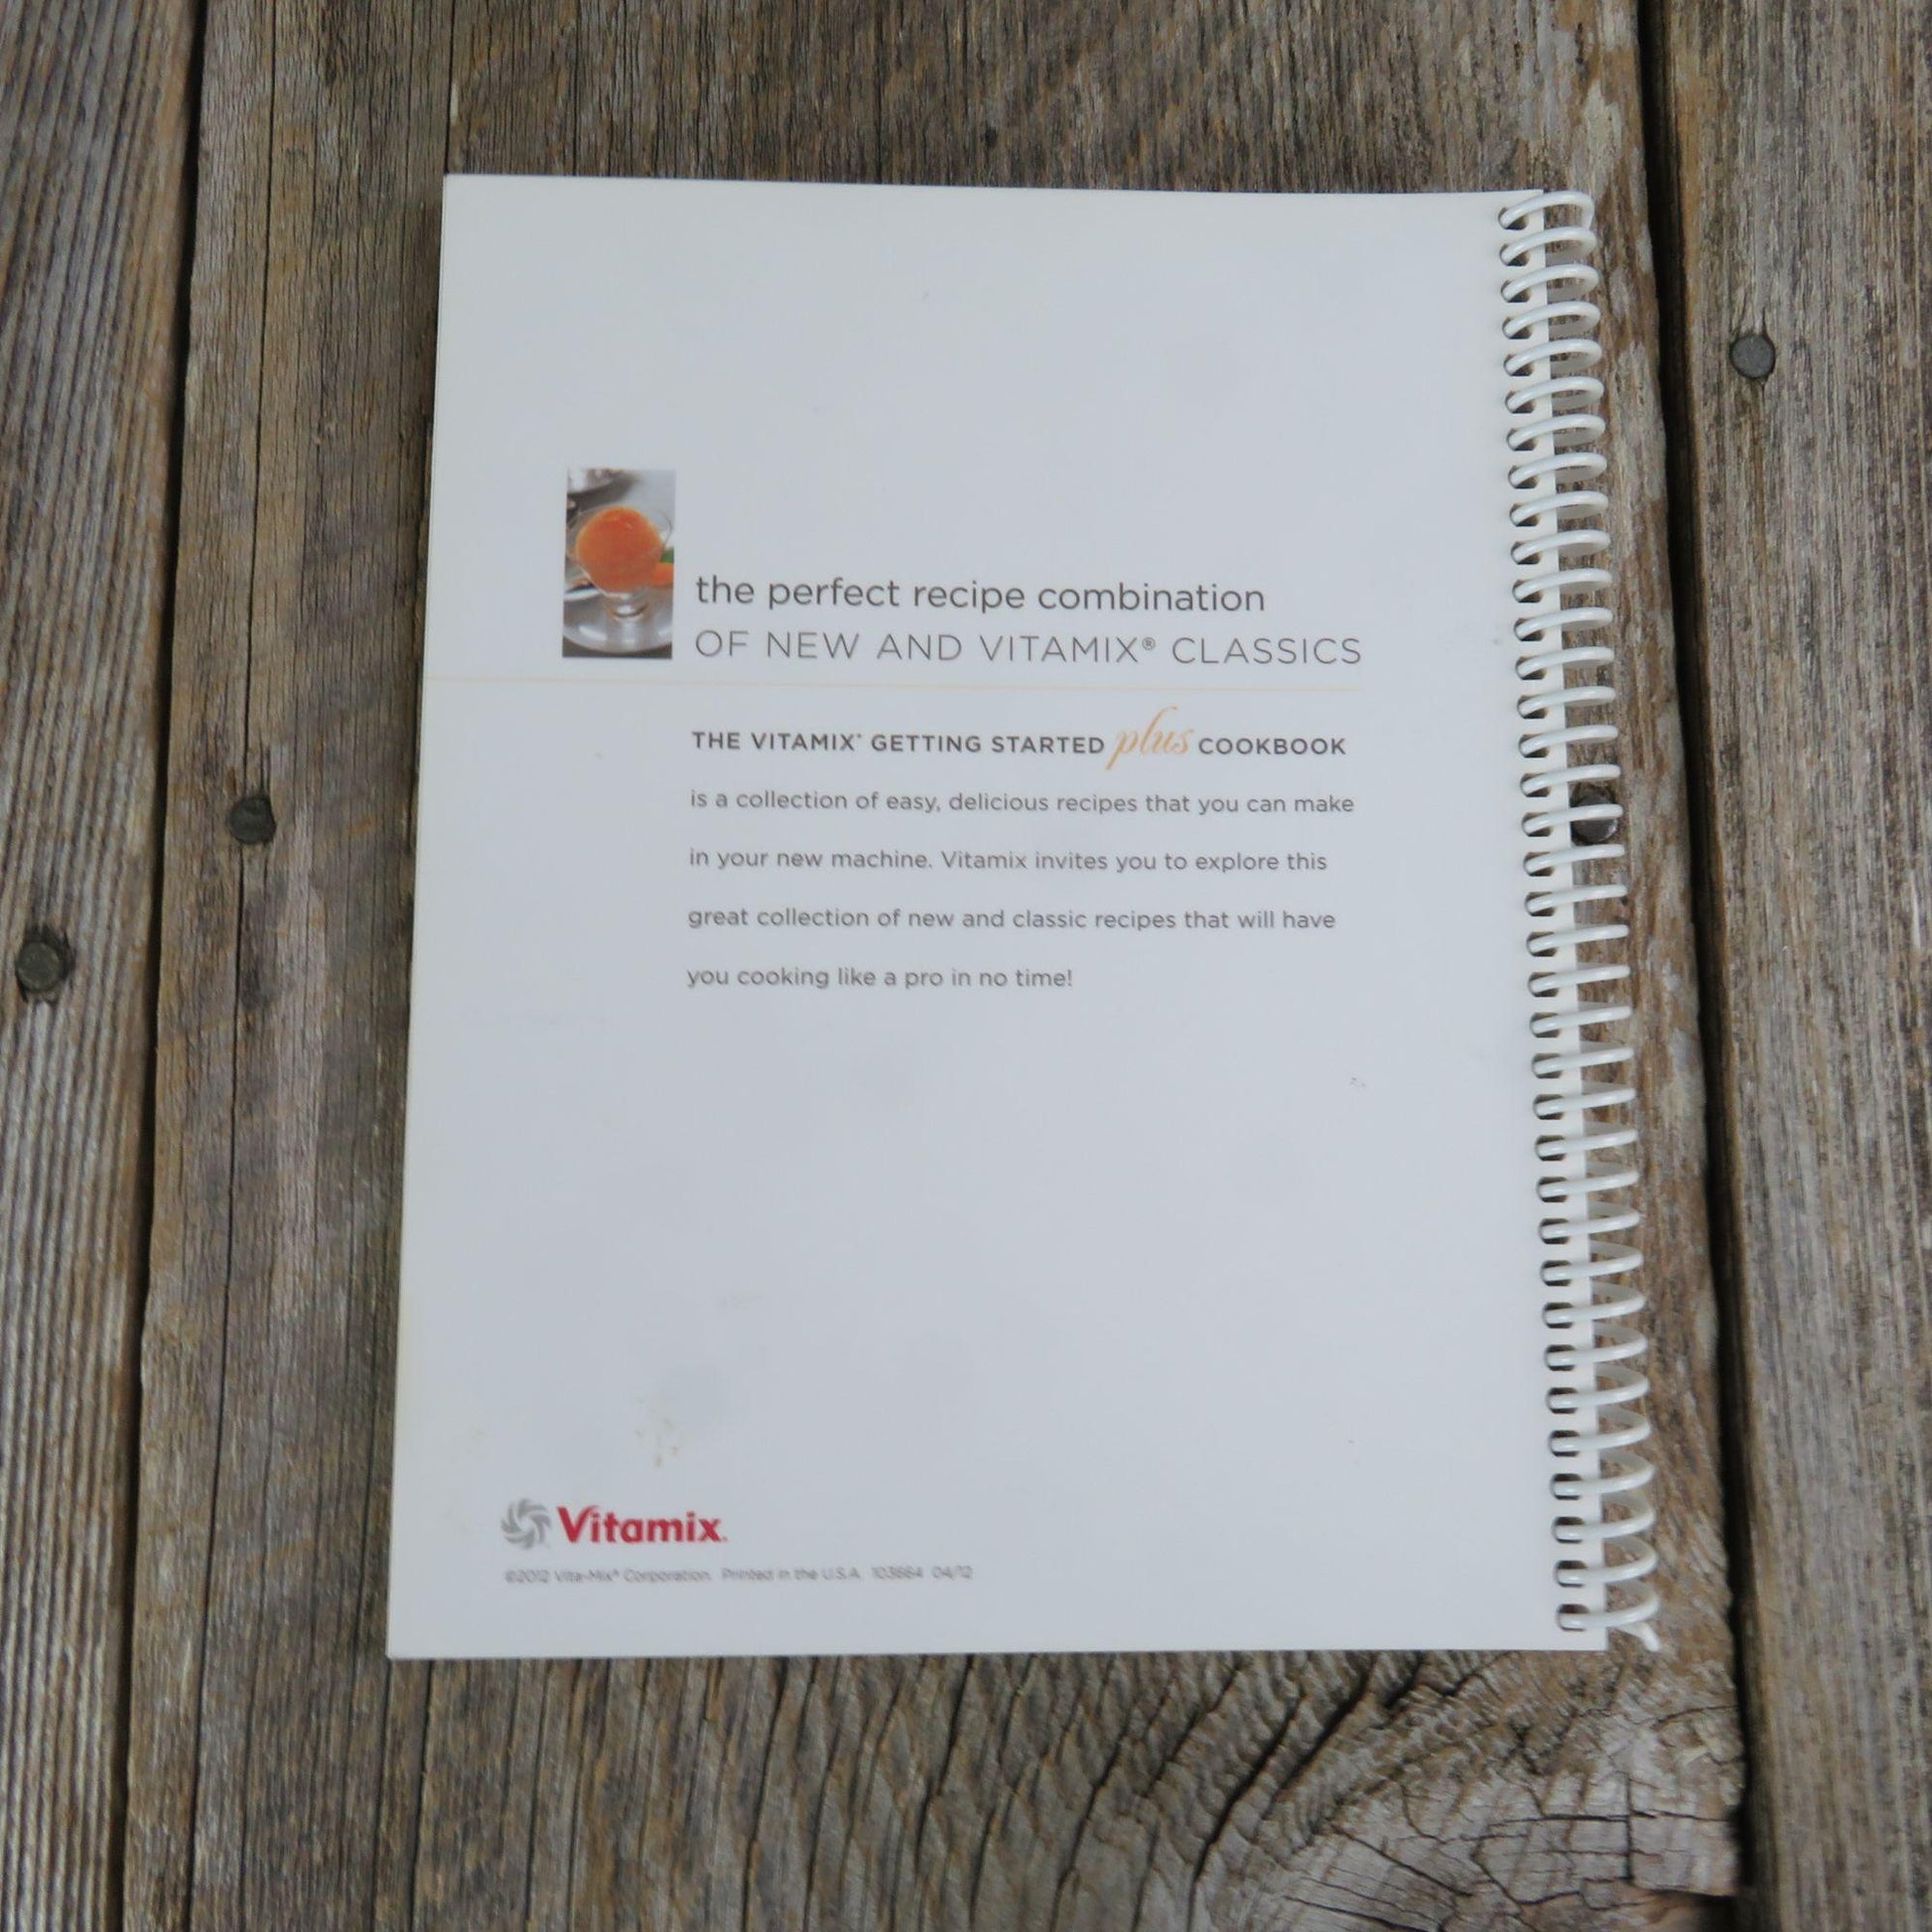 Vitamix Cookbook Getting Started Plus Blender Food Processor Recipes 2012 - At Grandma's Table